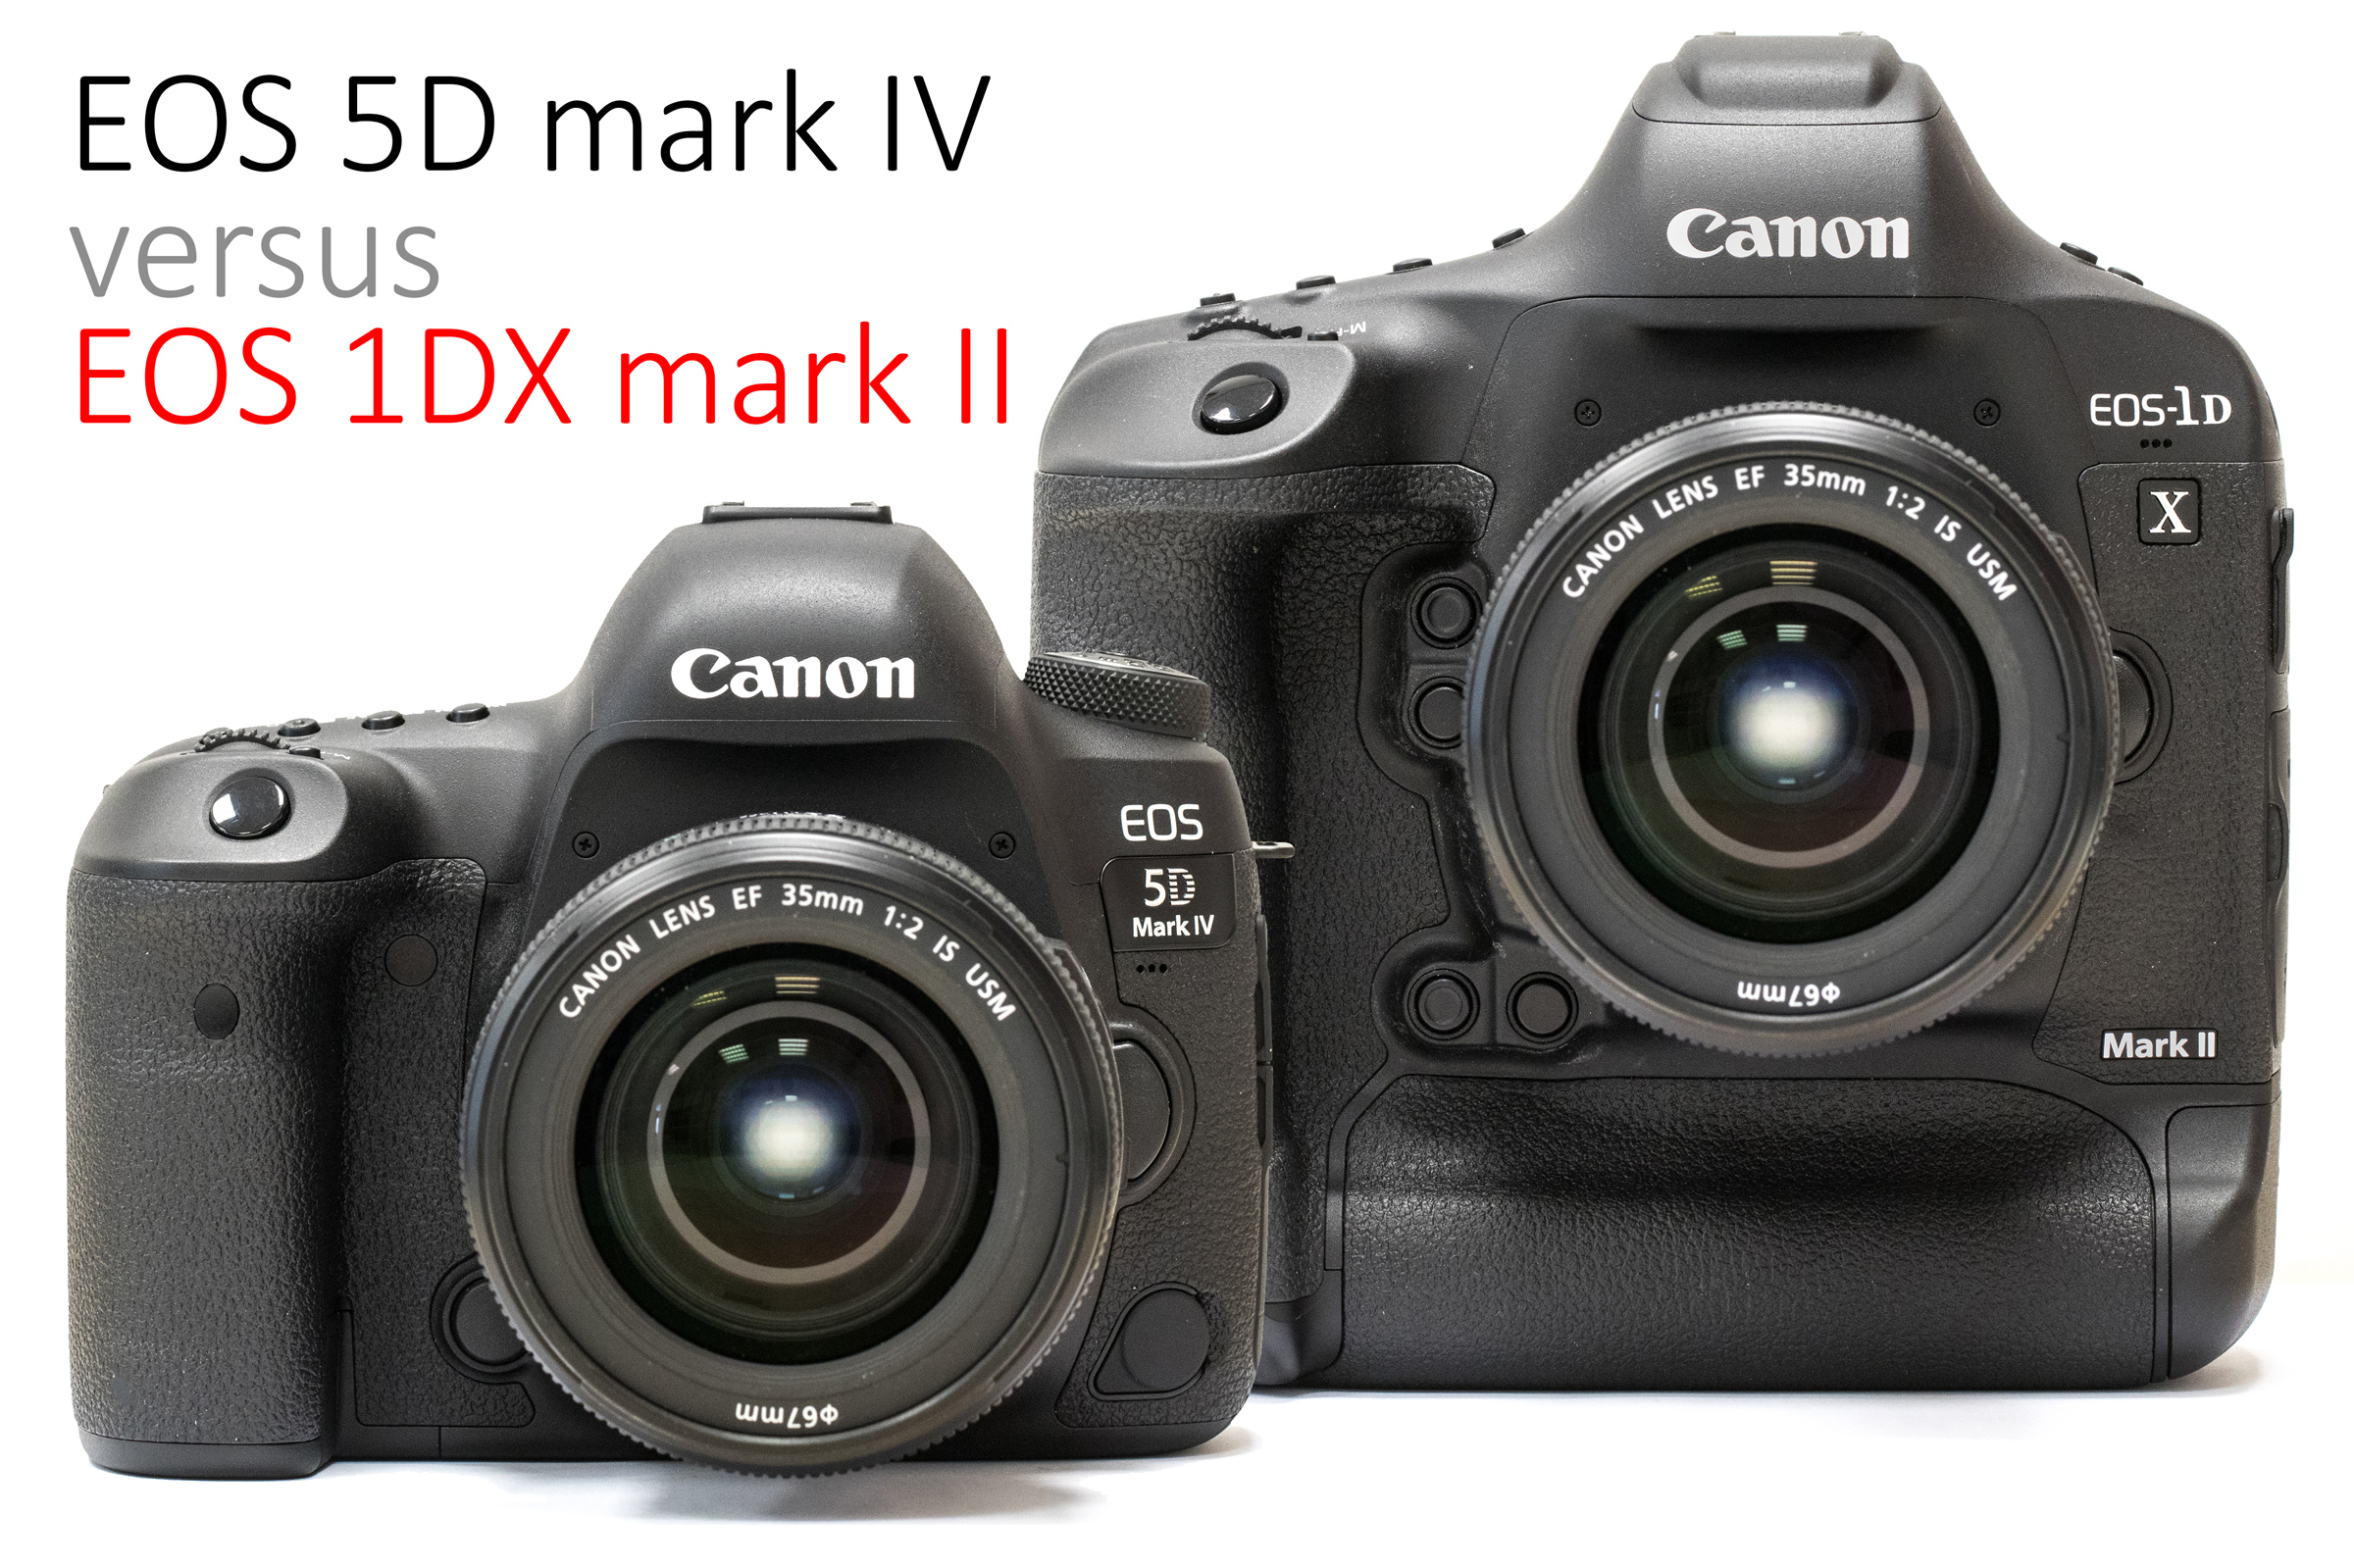 EOS 5D mark IV vs. EOS 1DX mark II